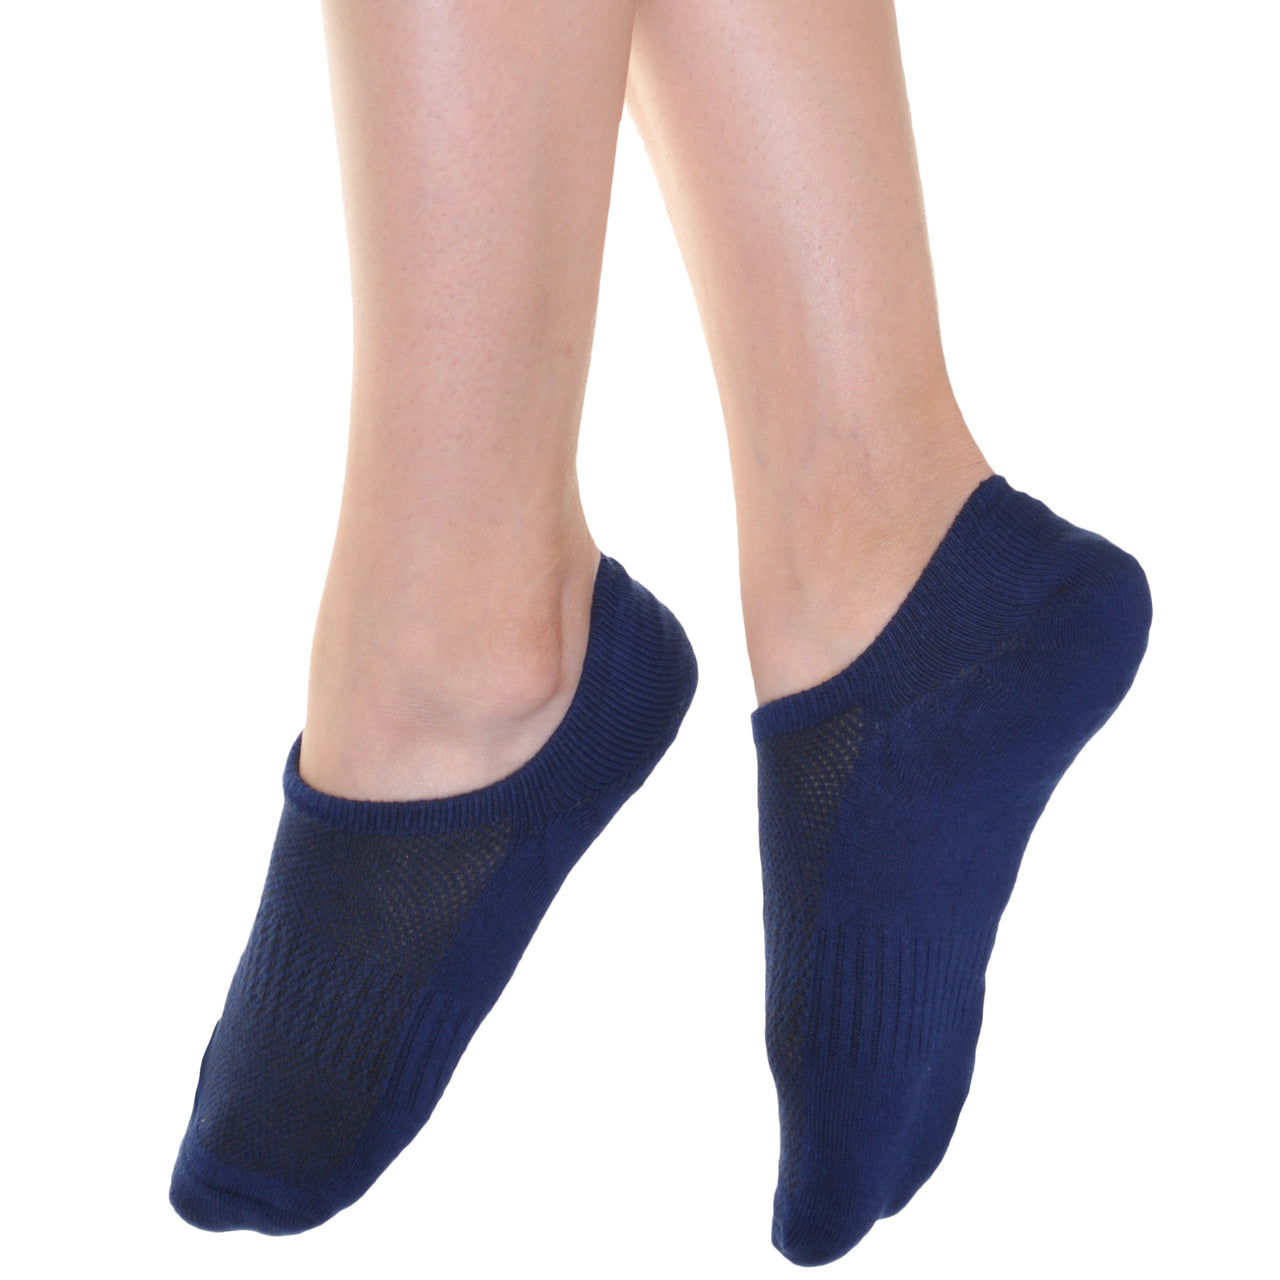 socks with heel grips